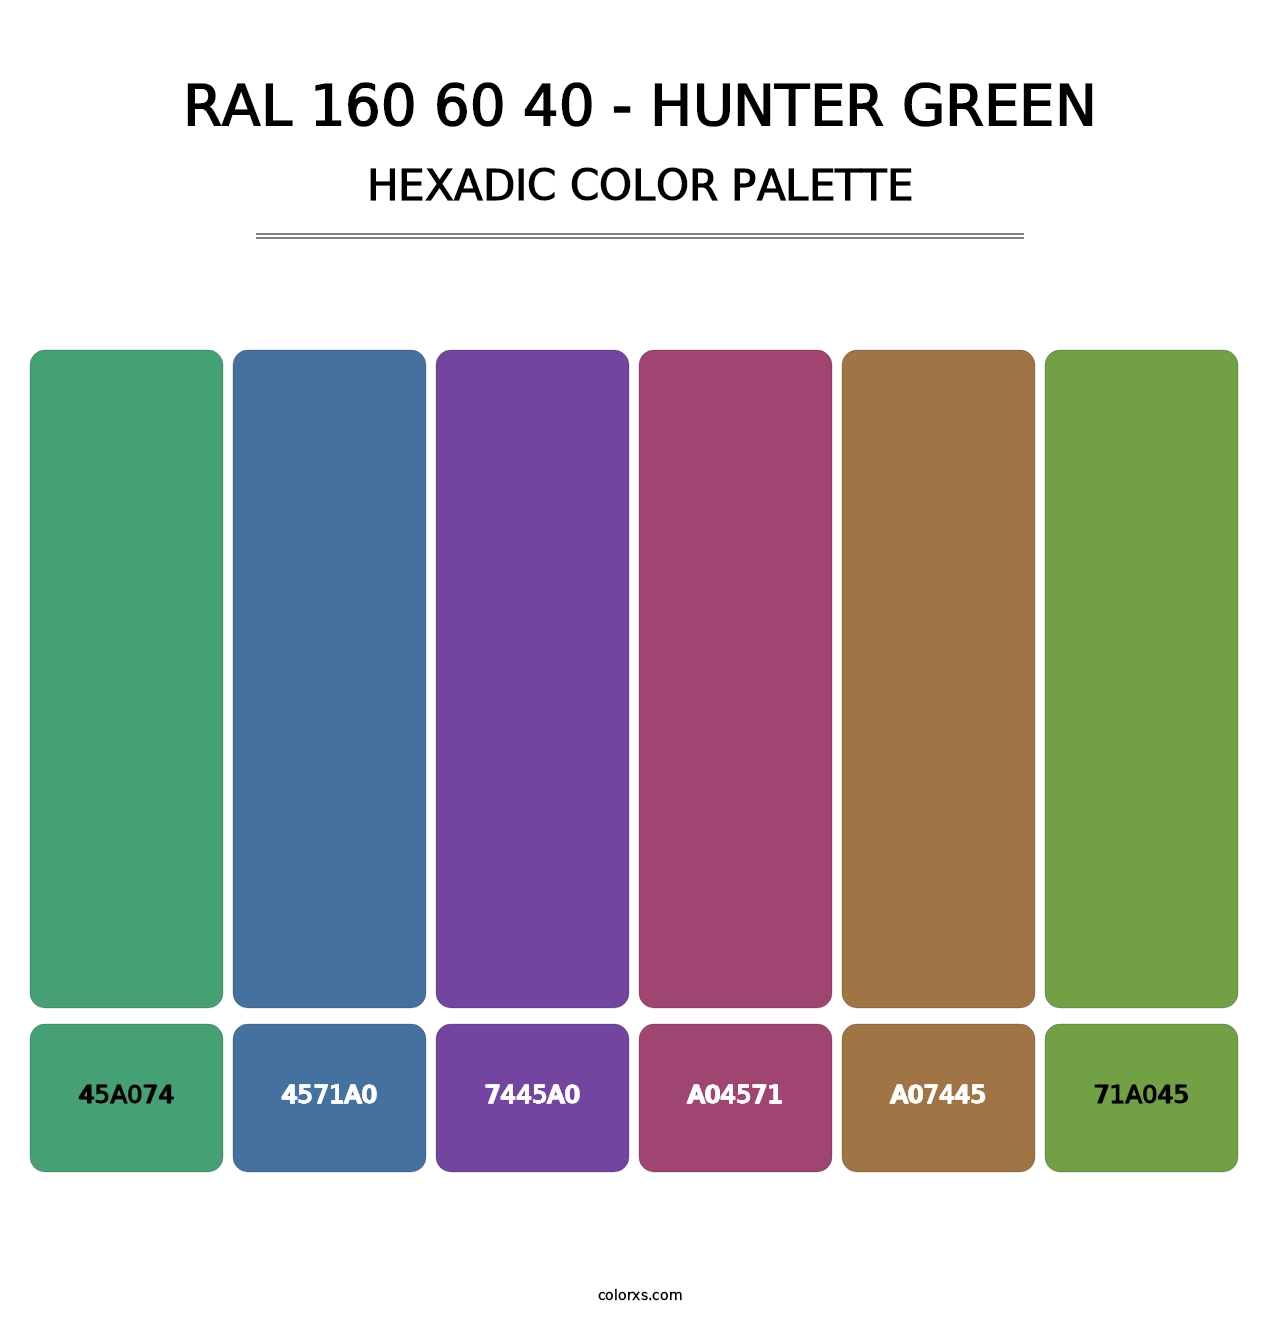 RAL 160 60 40 - Hunter Green - Hexadic Color Palette